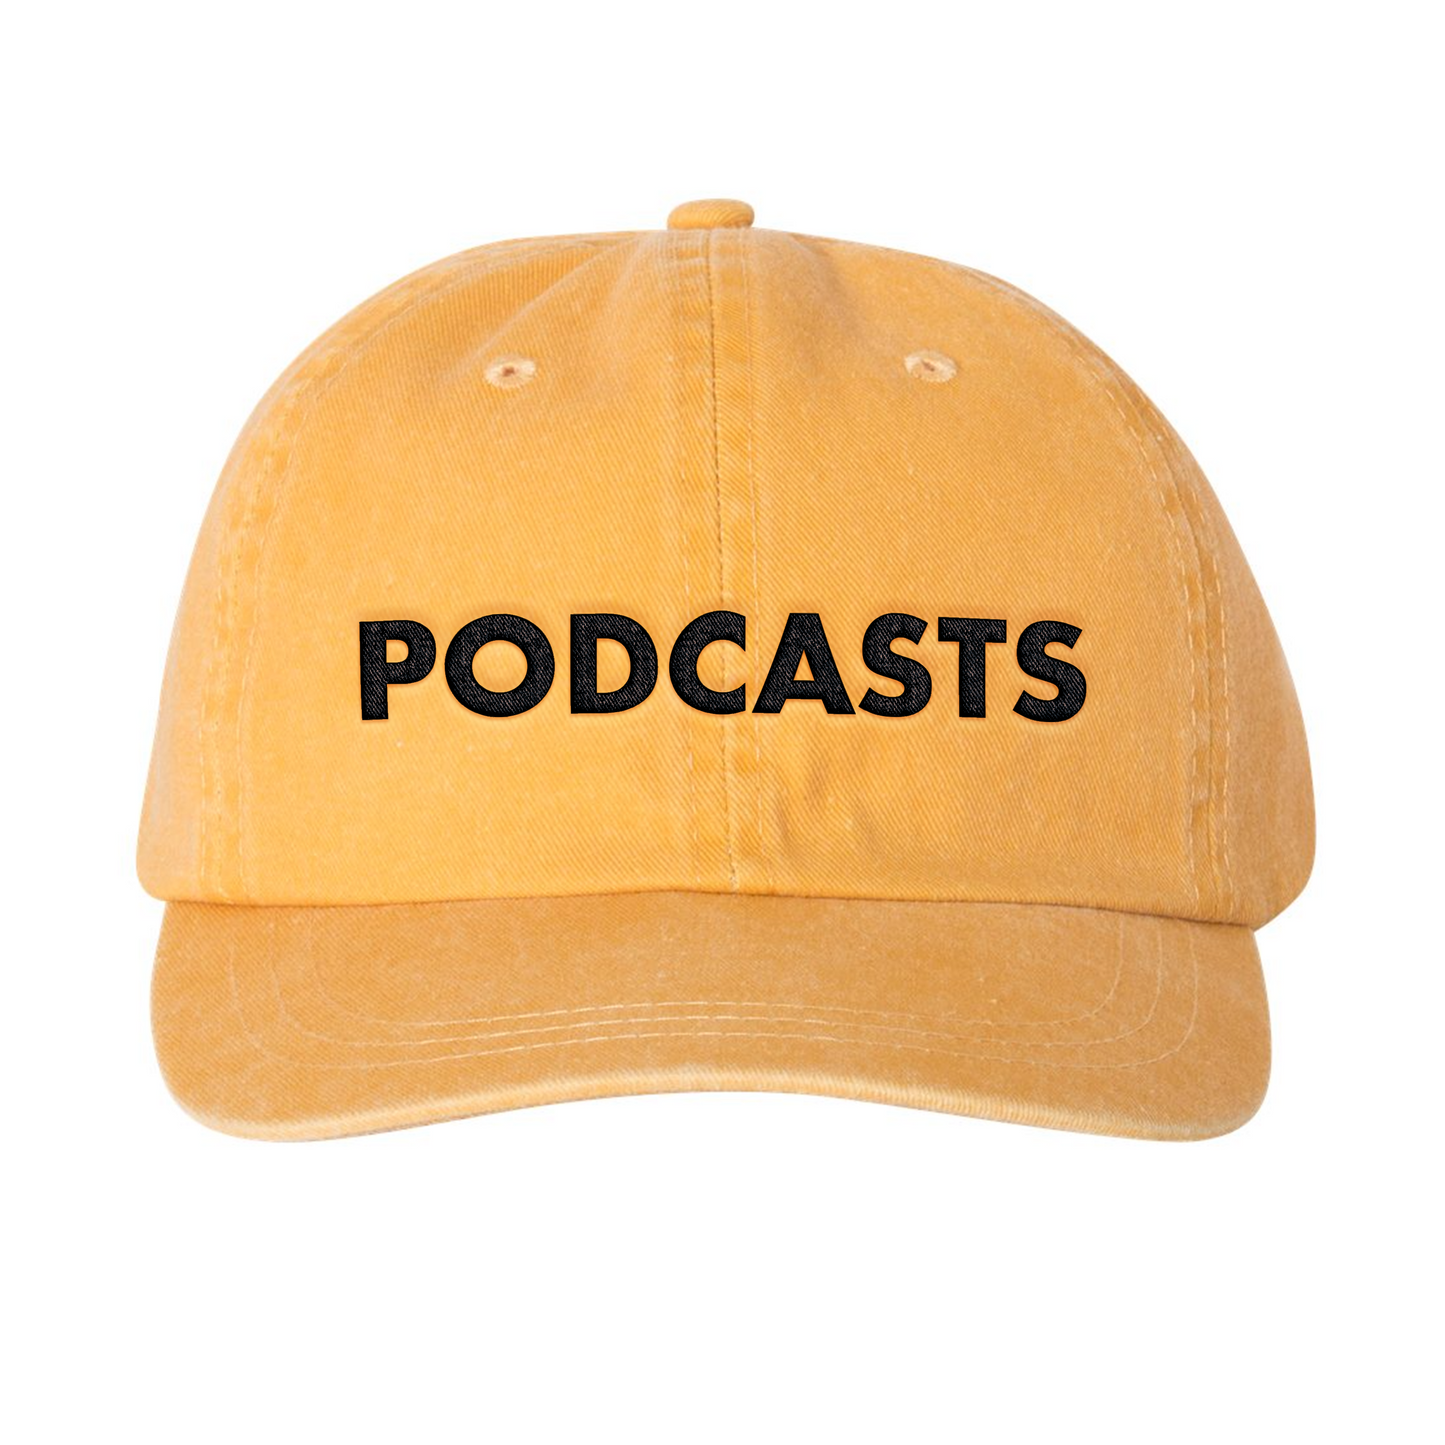 Baseball cap: A yellow baseball cap that says, “Podcasts” in a black sans serif.